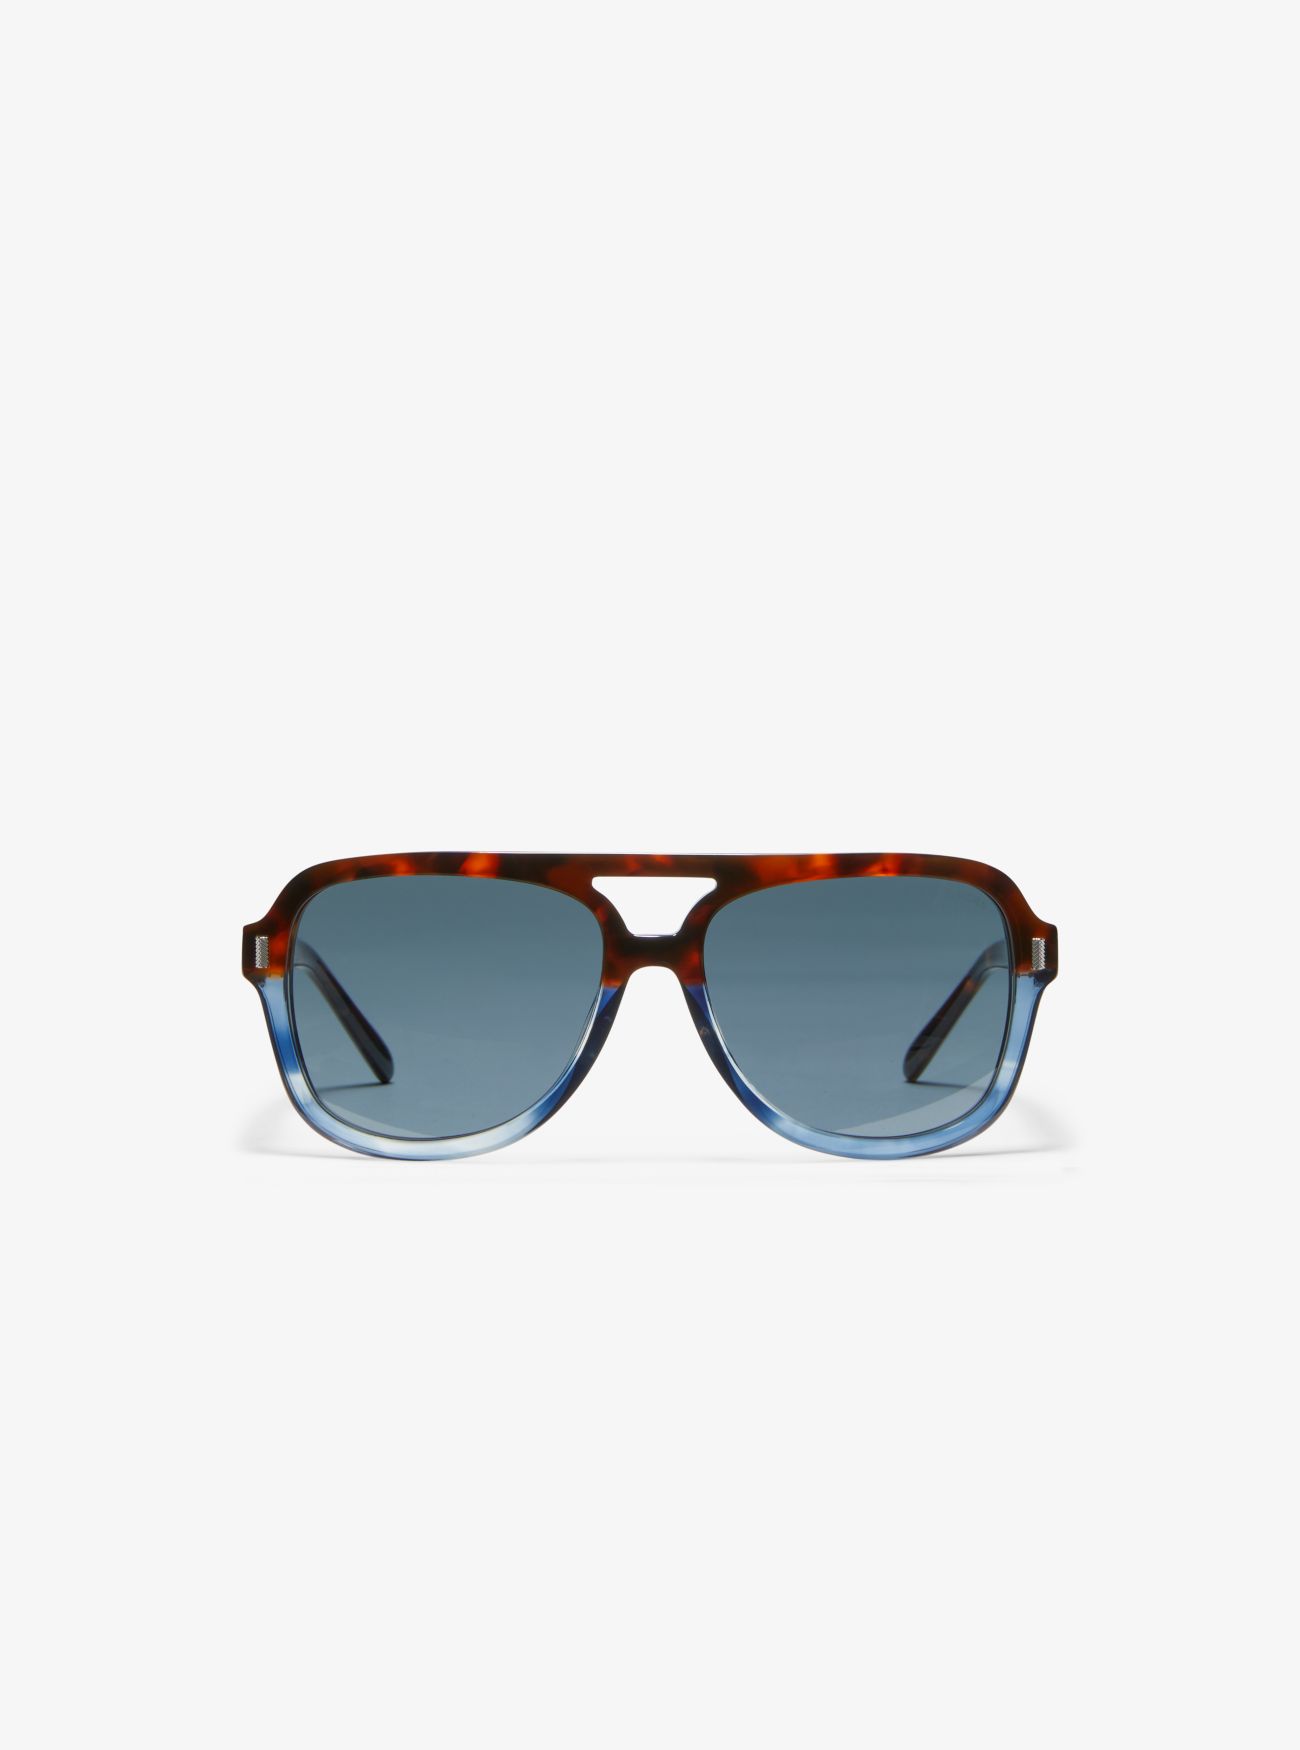 MK Durango Sunglasses - Brown/navy - Michael Kors